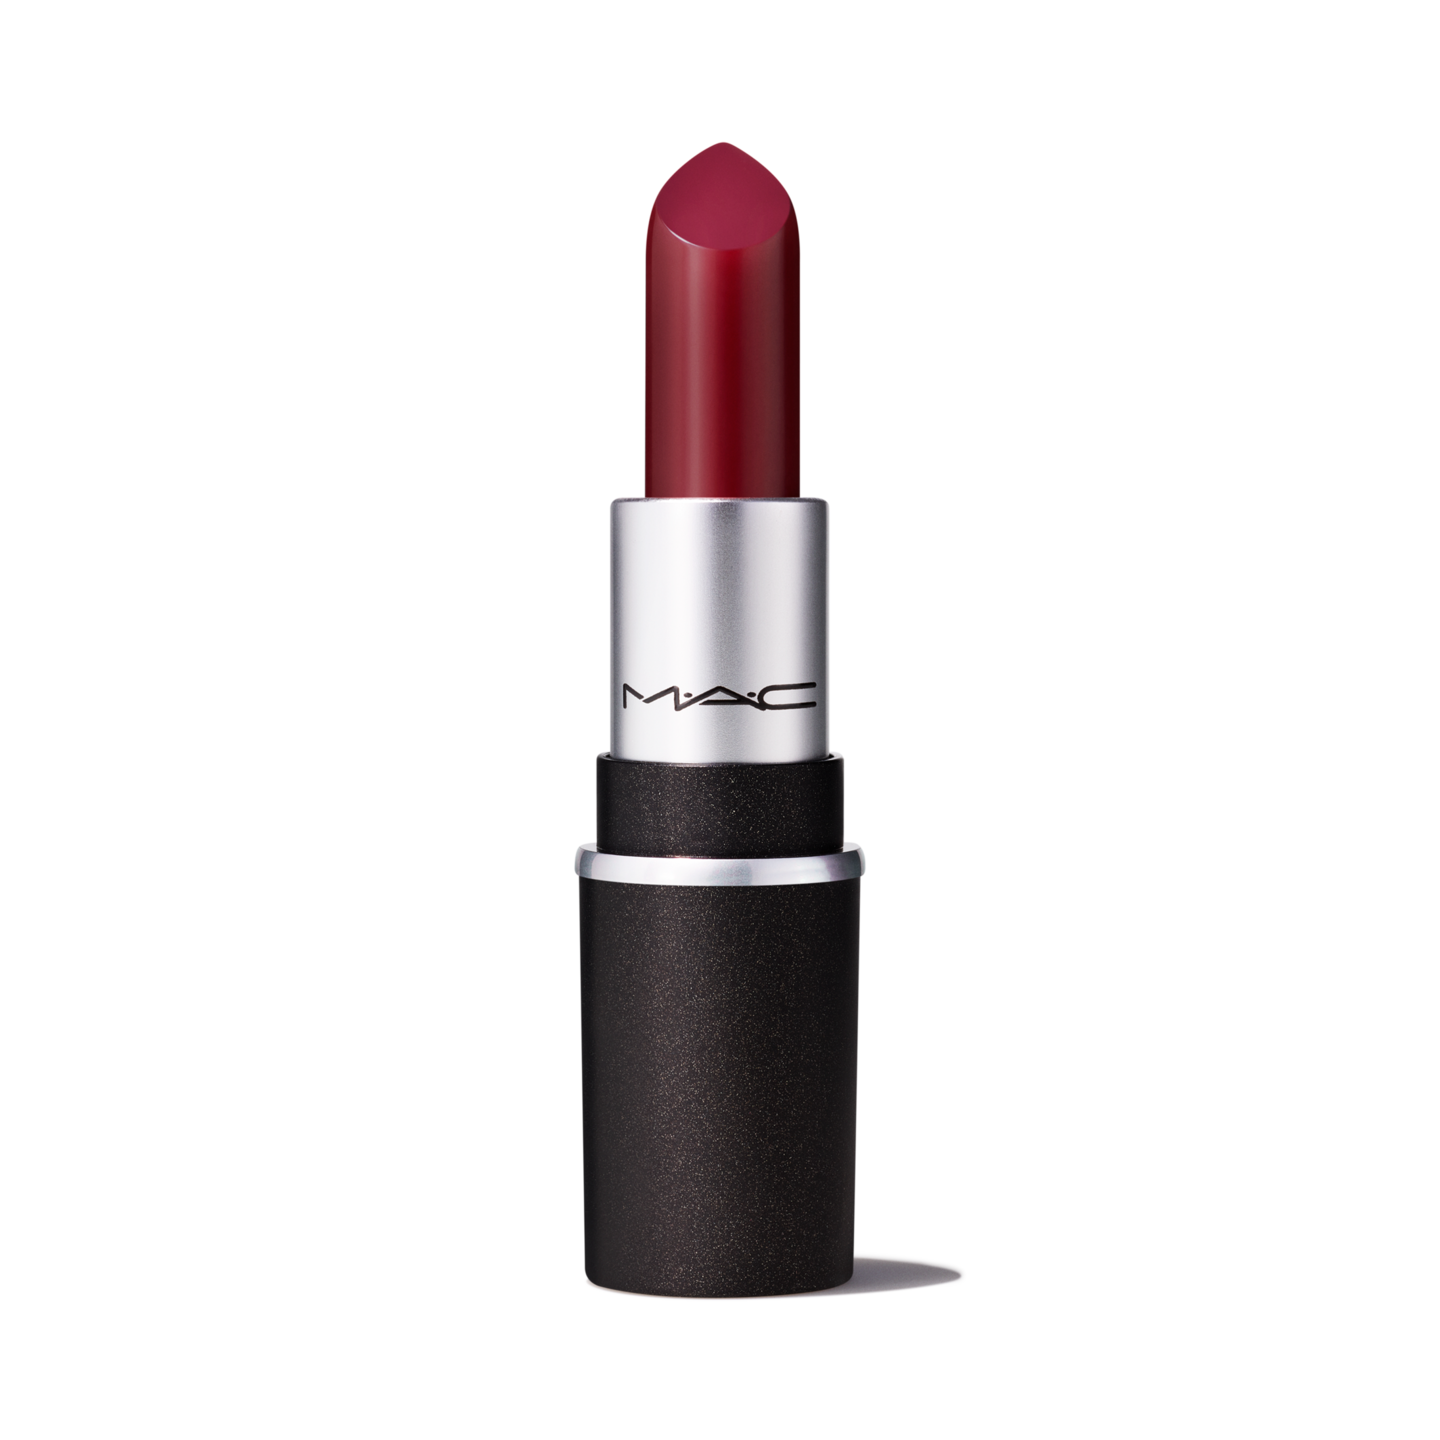 Mini MAC Travel Size Lipstick Including Ruby Woo & Velvet Teddy Minis | MAC Cosmetics - Official Site